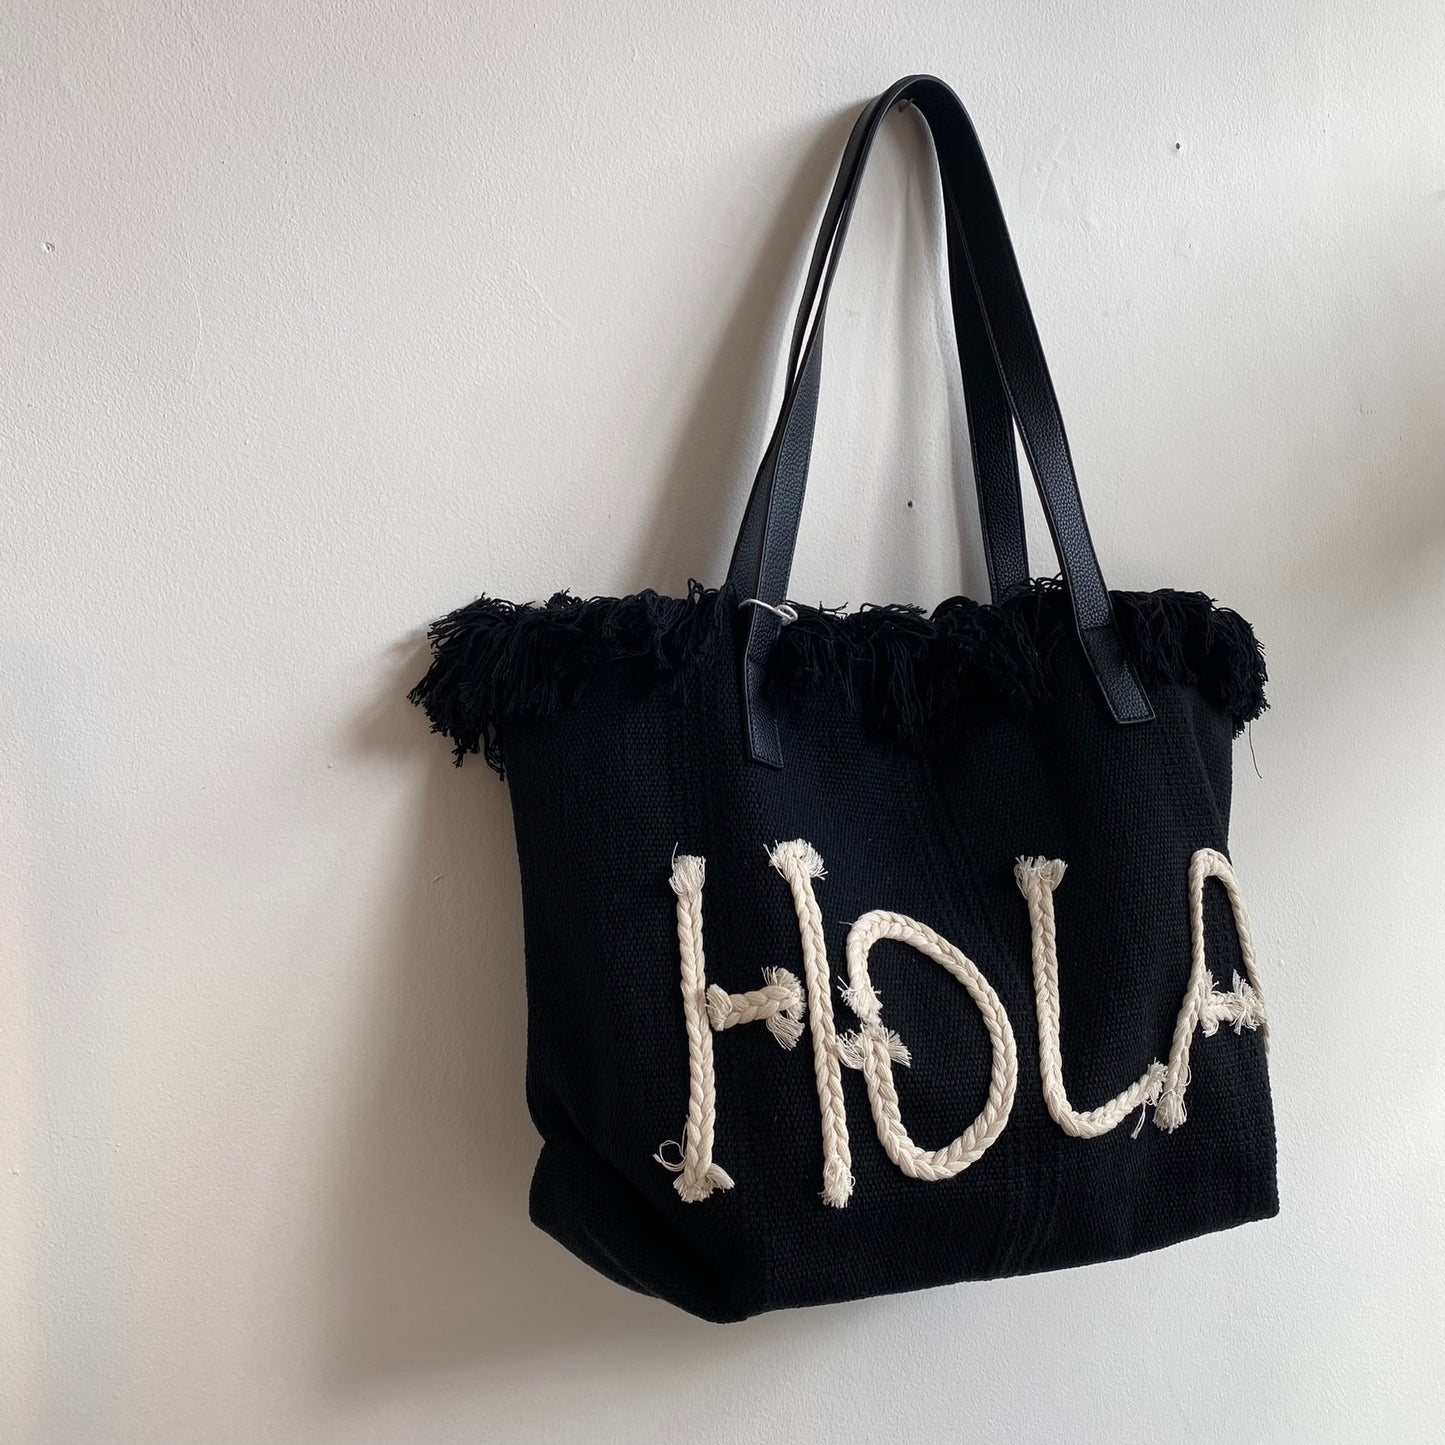 'Hola' bag - black